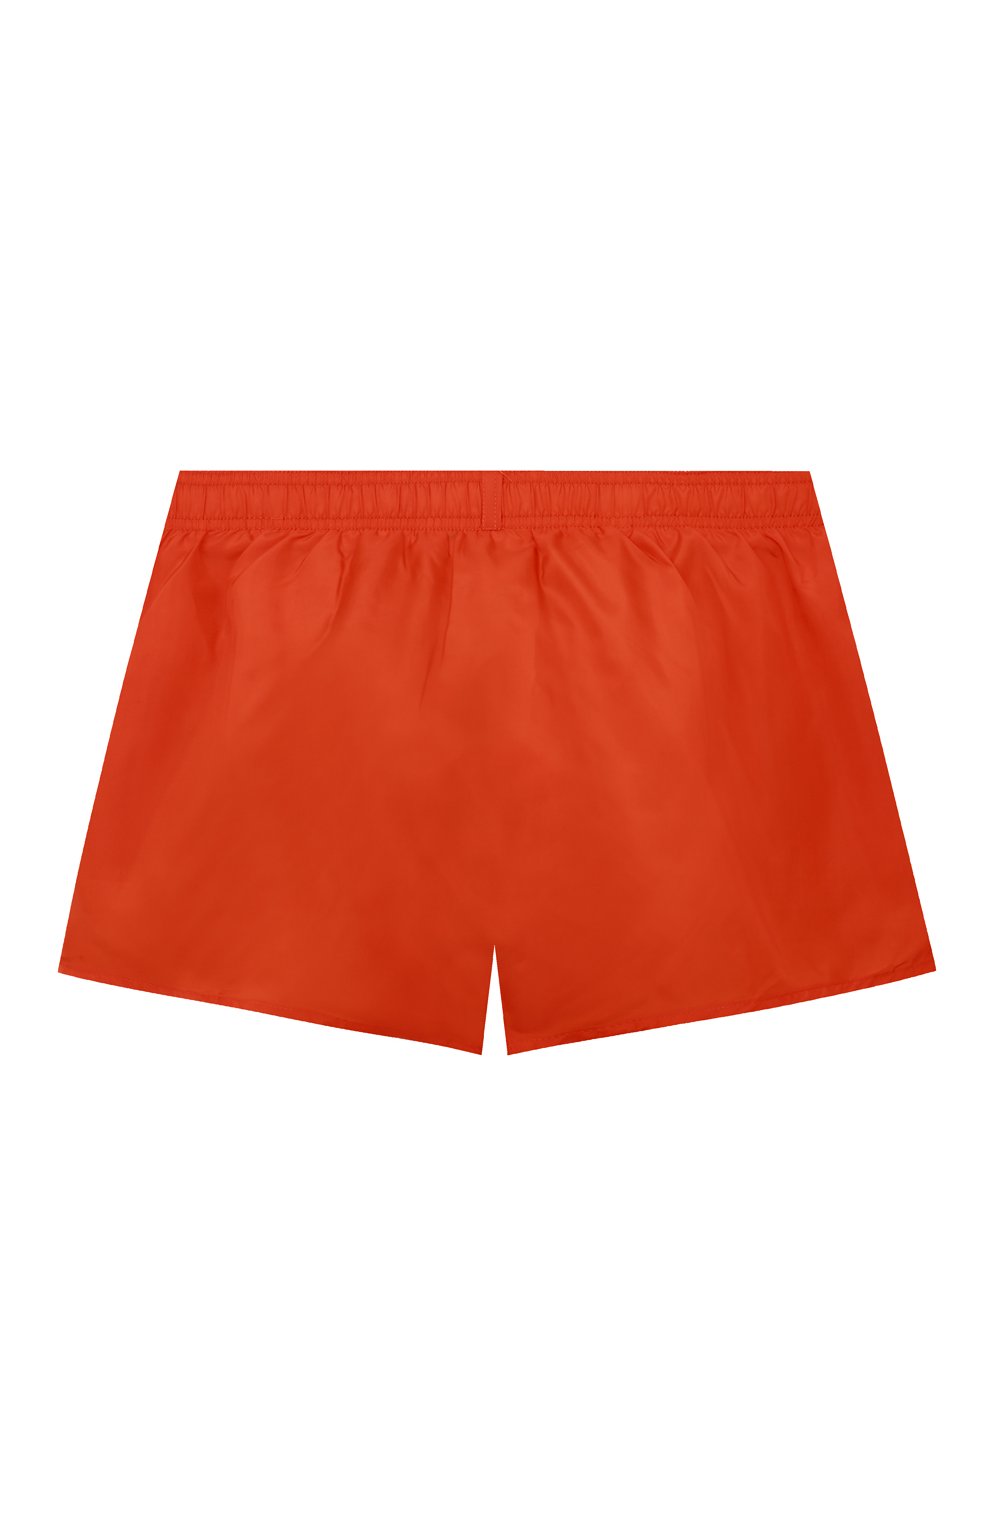 Детские плавки-шорты DSQUARED2 оранжевого цвета, арт. DQ1019-D00QK | Фото 2 (Кросс-КТ: Пляж; Материал внешний: Синтетический материал)